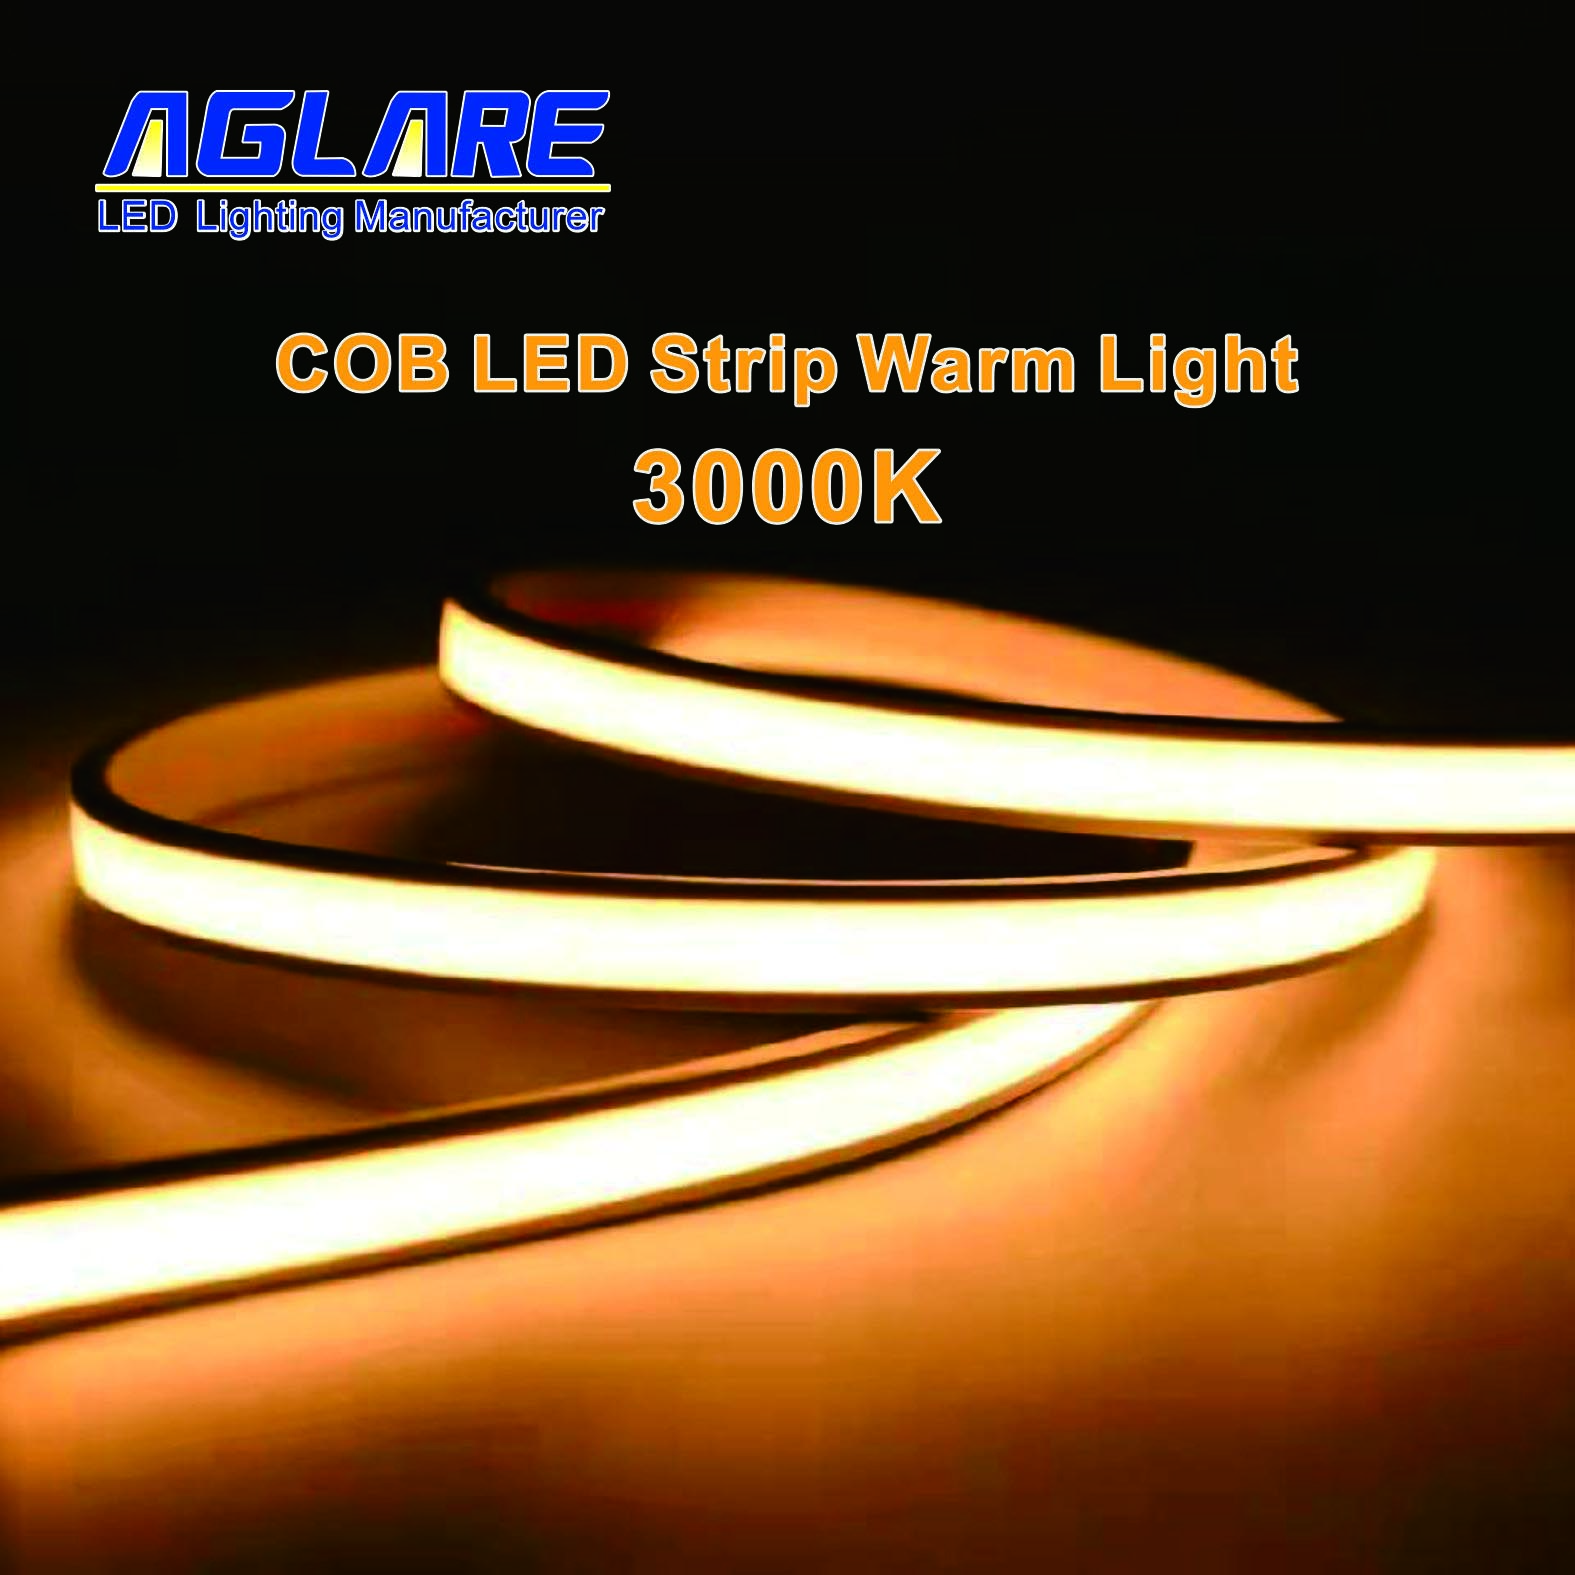 COB LED Strip Warm Light(3000K).jpg